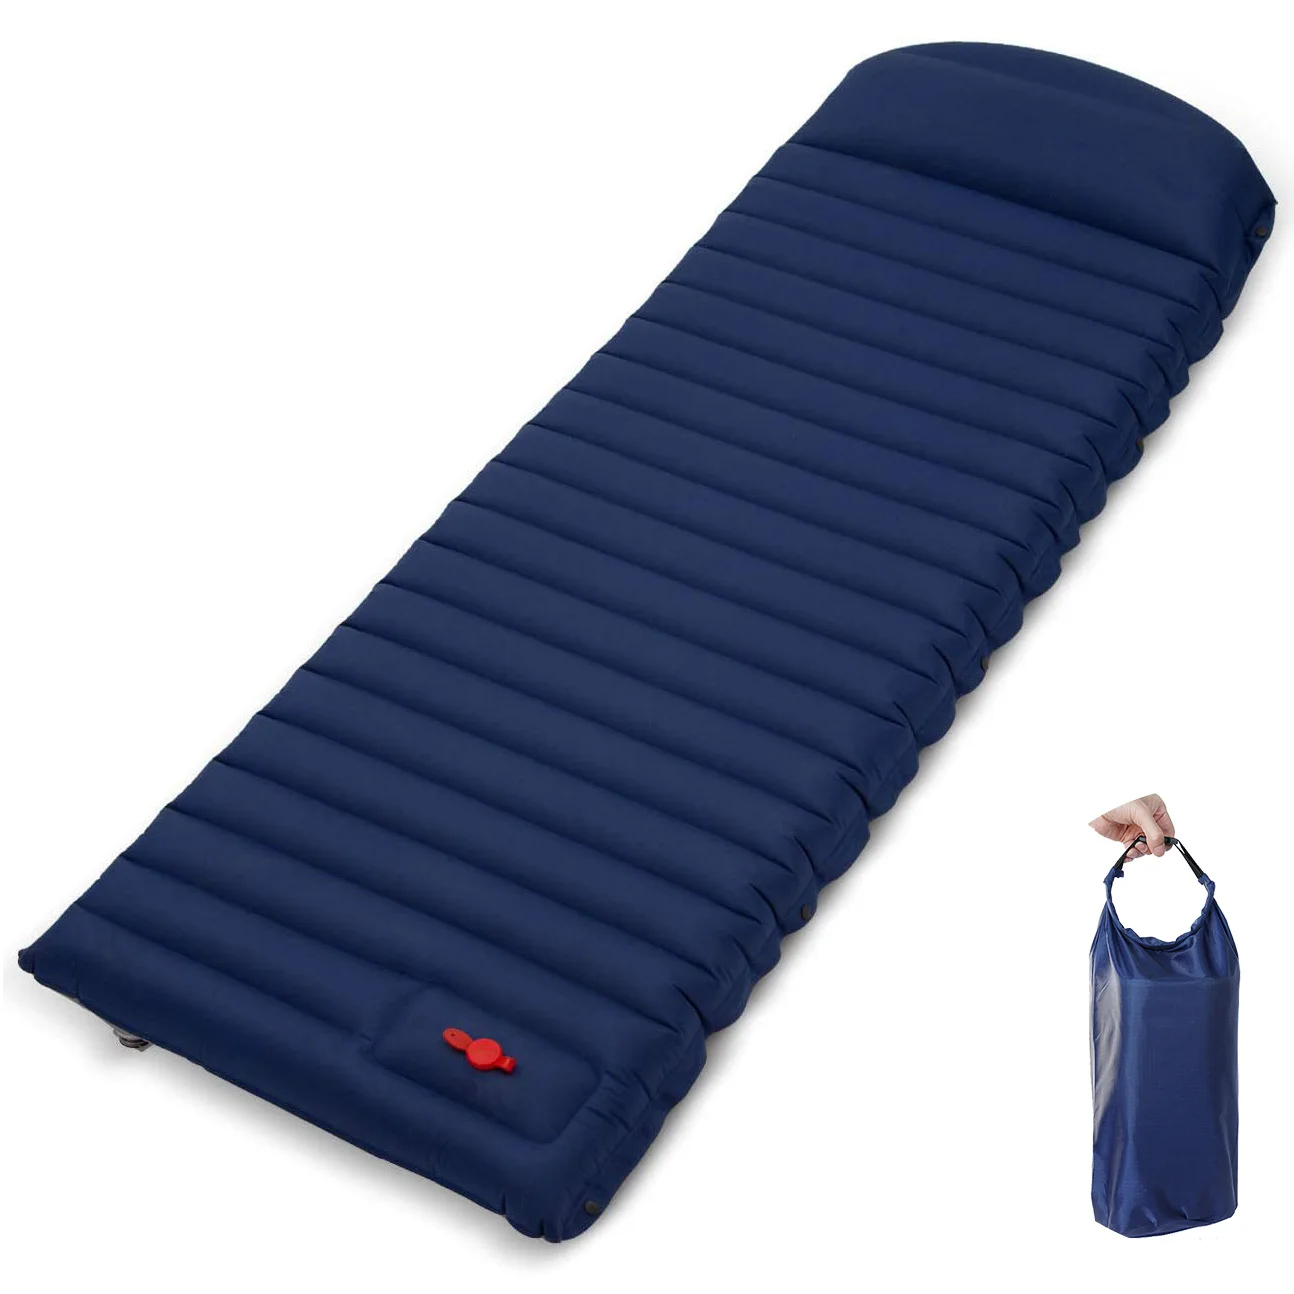 Inflatable Camping Mattress 10cm Thickness with Pillow Self-Inflating Sleeping Pads Tent Beach Picnic Finshing Air Mattress Mat